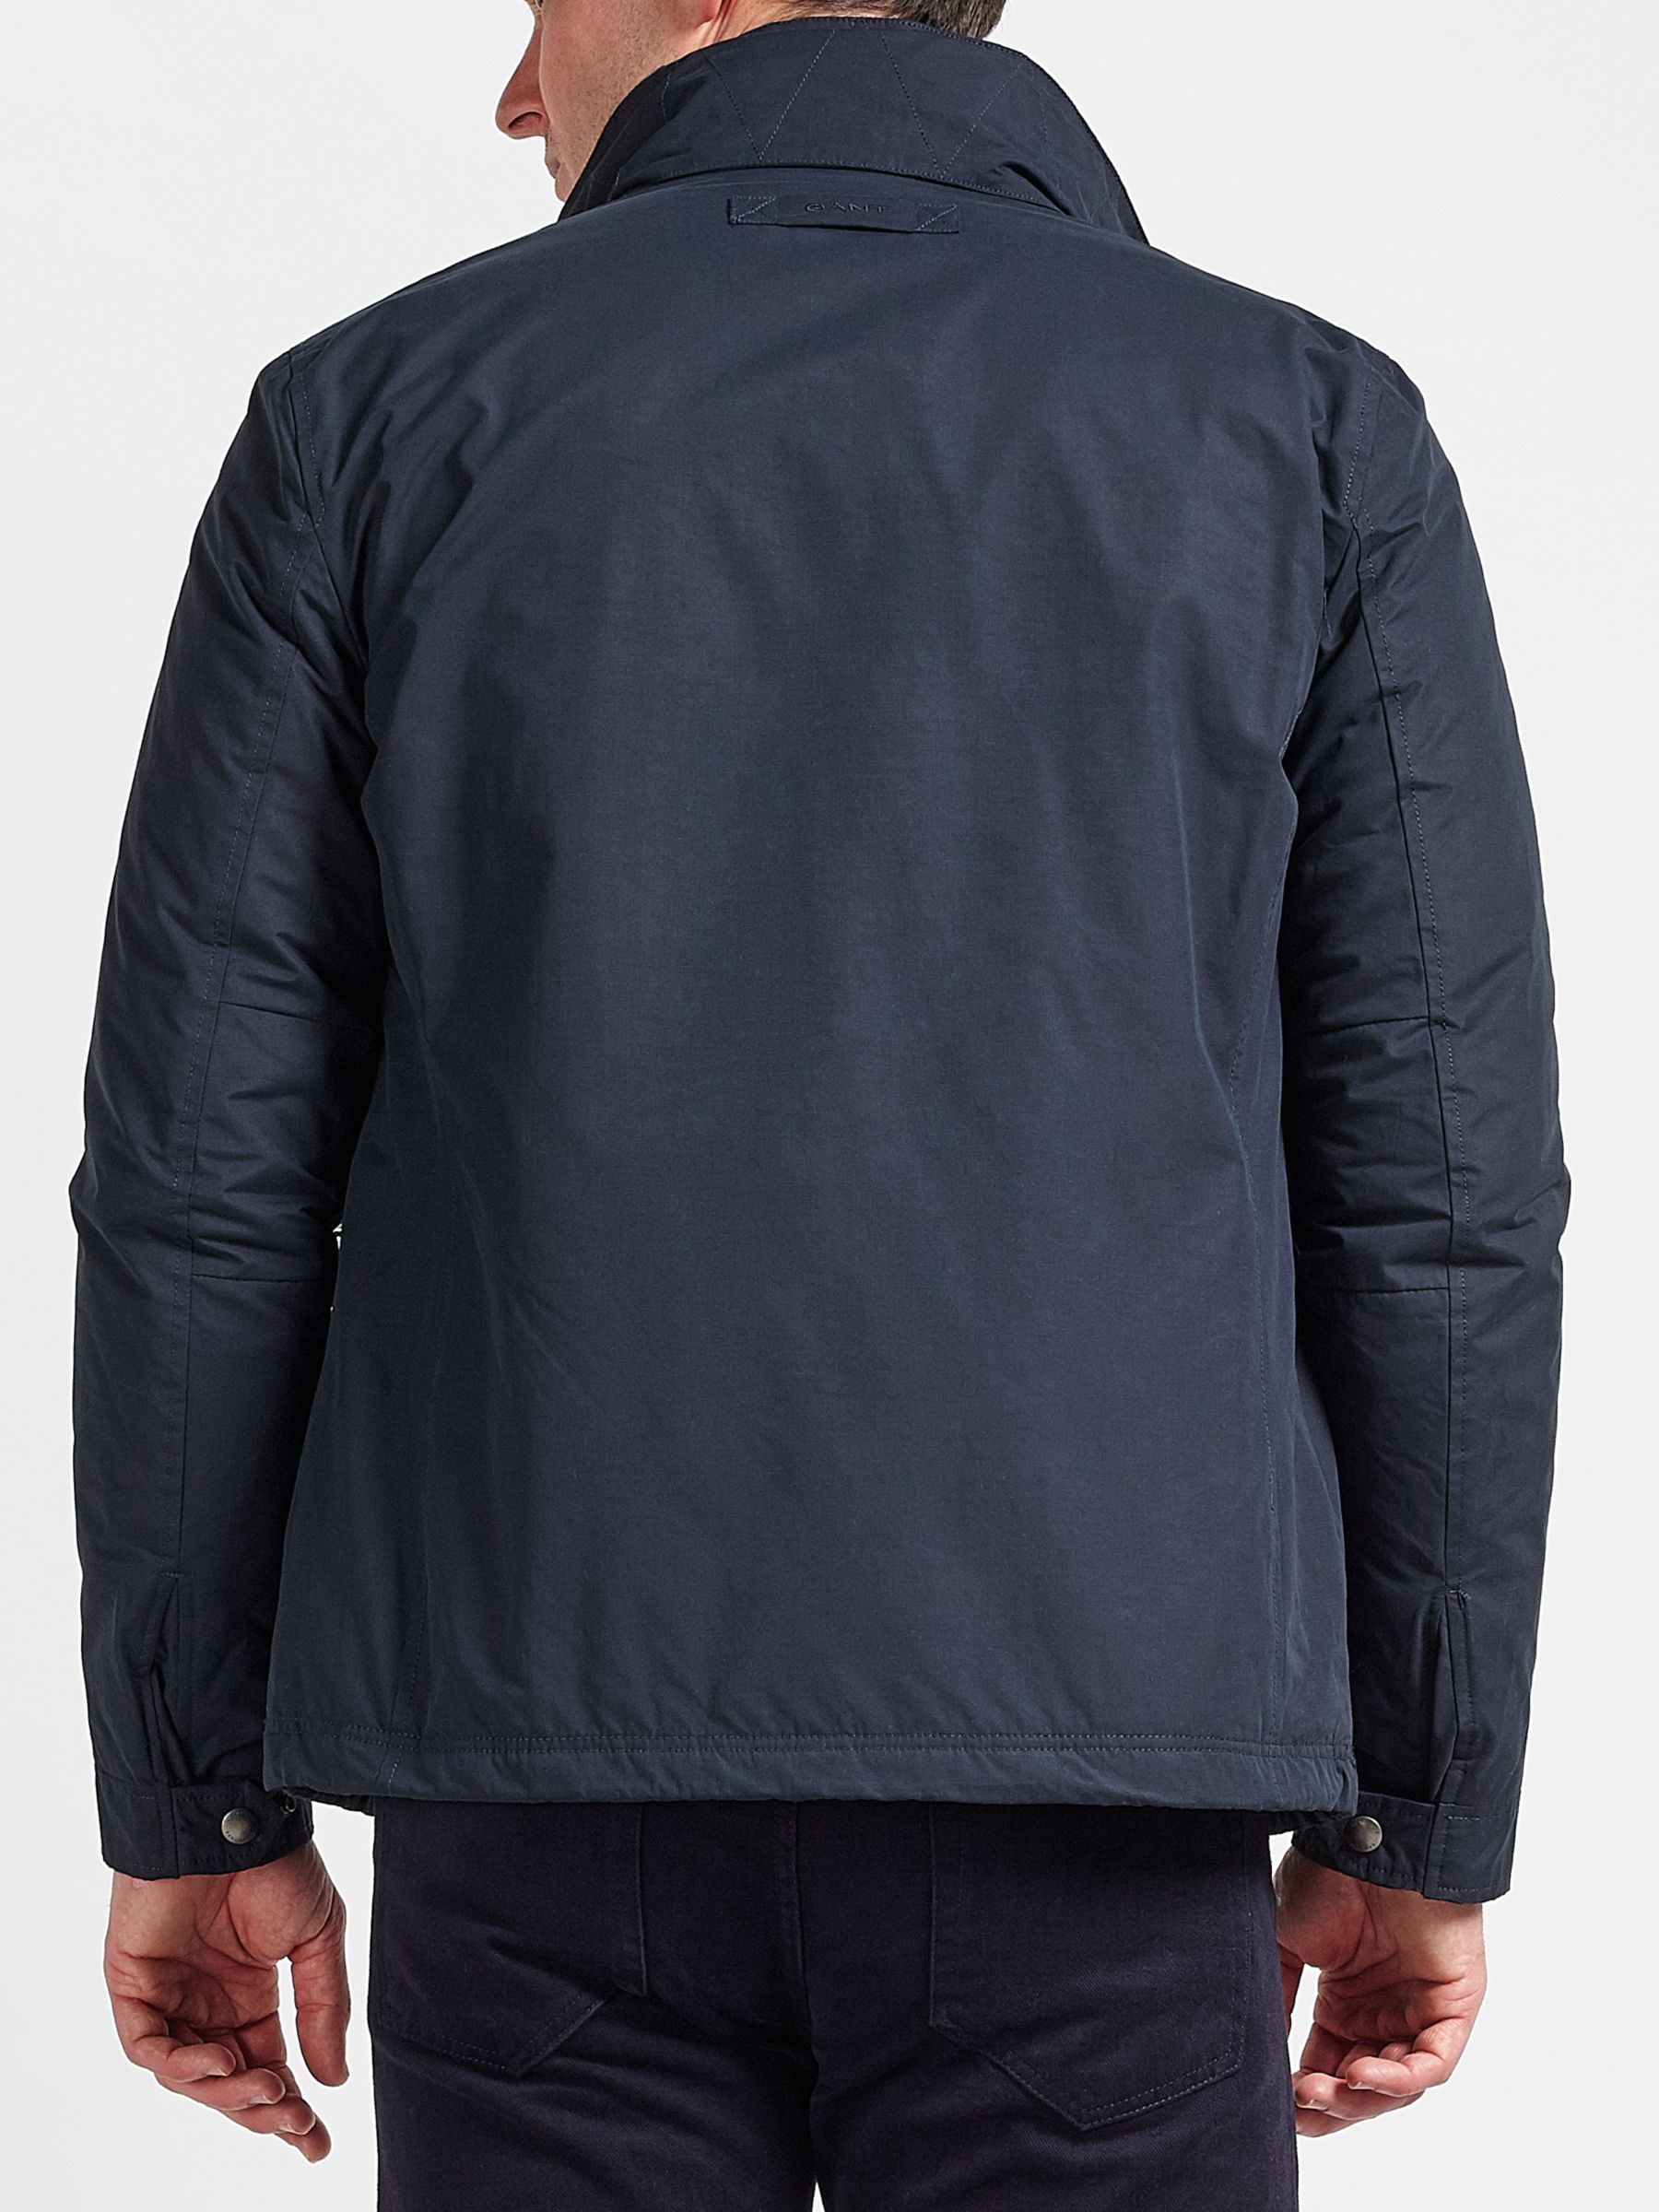 Gant Mid Length Jacket, Navy at John Lewis & Partners